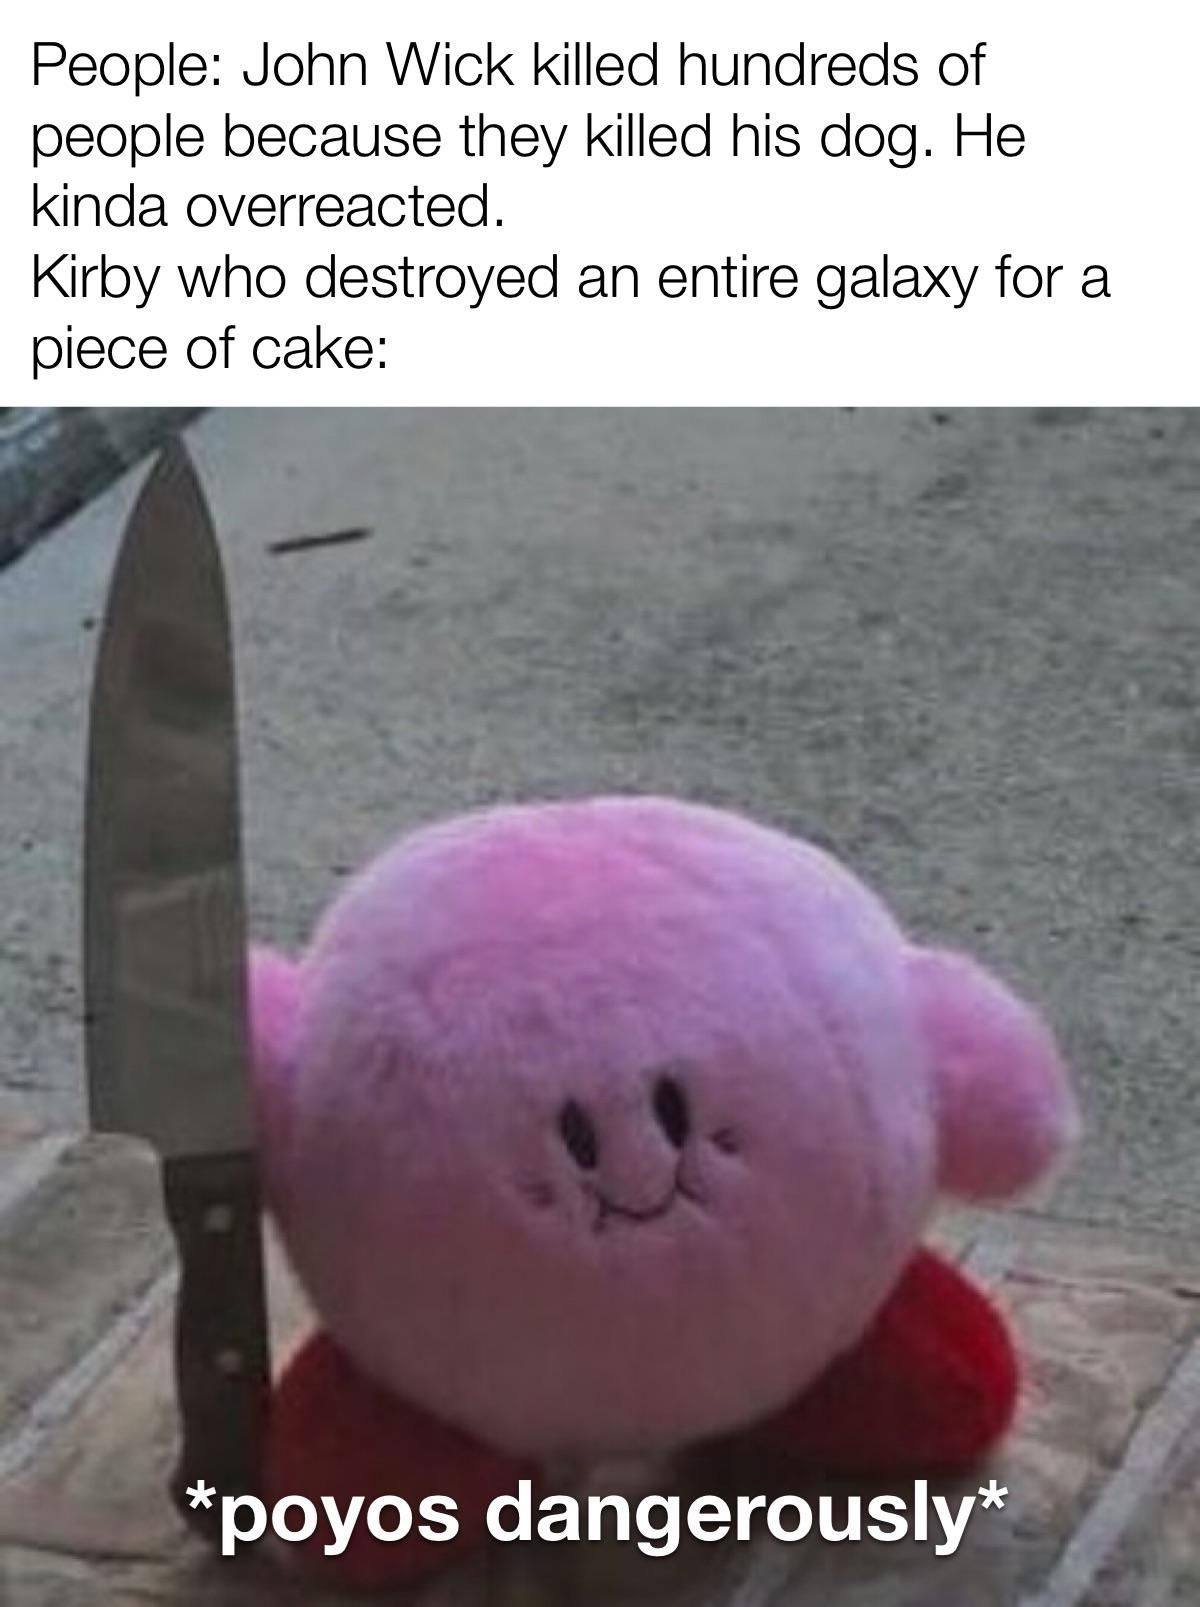 Oh ***, he’s got a knife